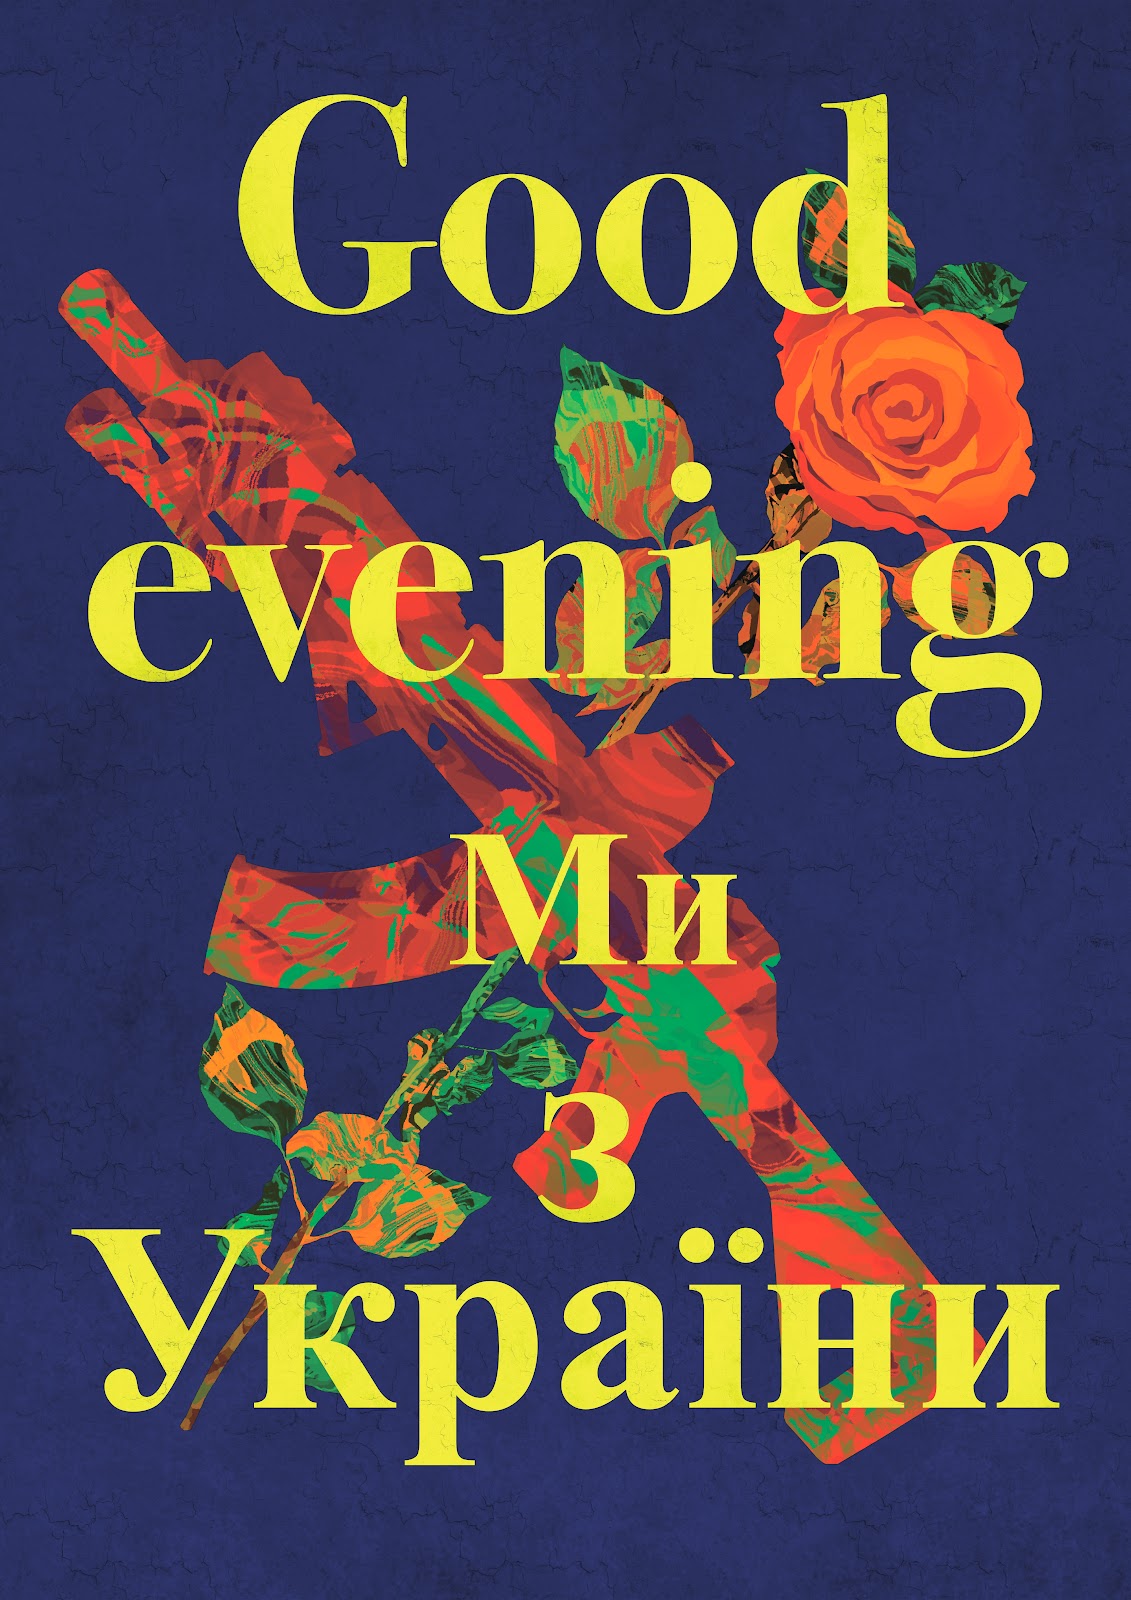 Anastasia Dzyuba - print 42x42 cm "Good evening"